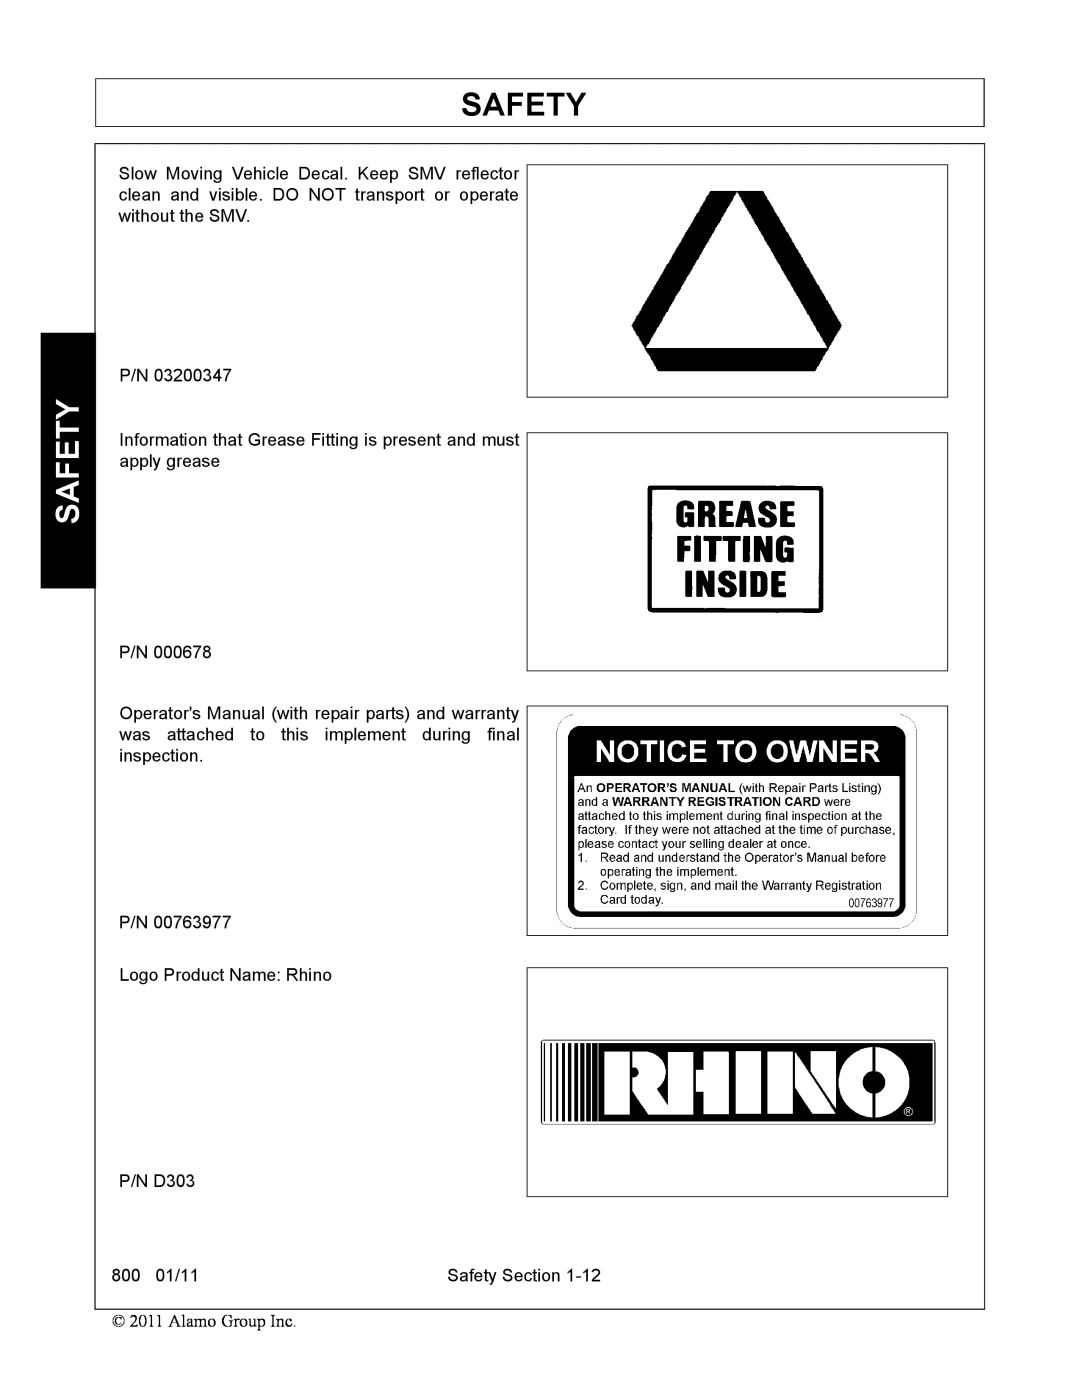 Alamo manual P/N Logo Product Name Rhino P/N D303, 800 01/11, Safety Section 